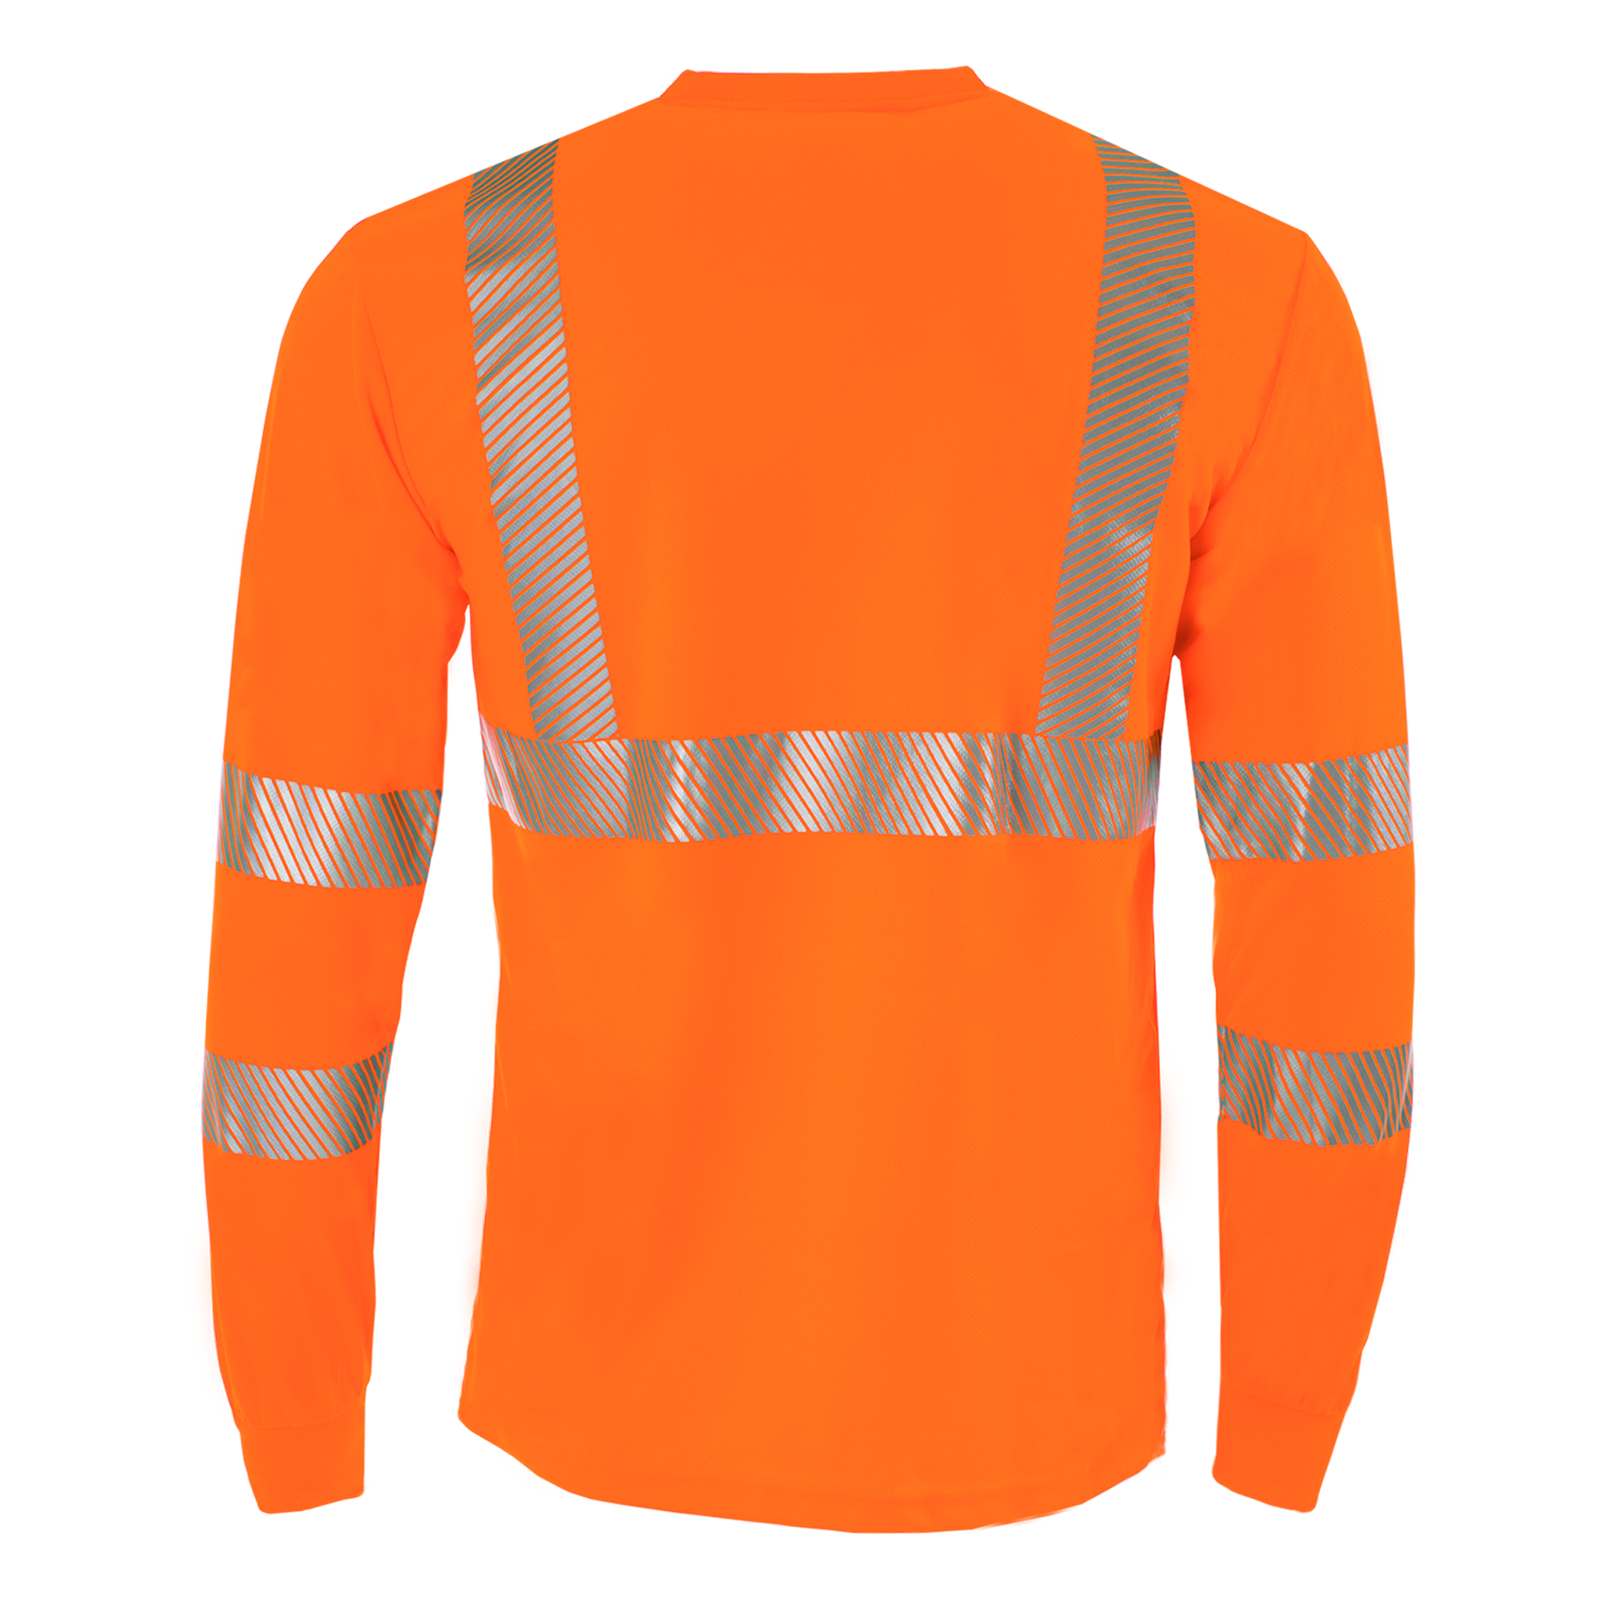 Back view of the JORESTECH Hi-Vis orange heat transfer reflective long sleeve safety pocket shirt 